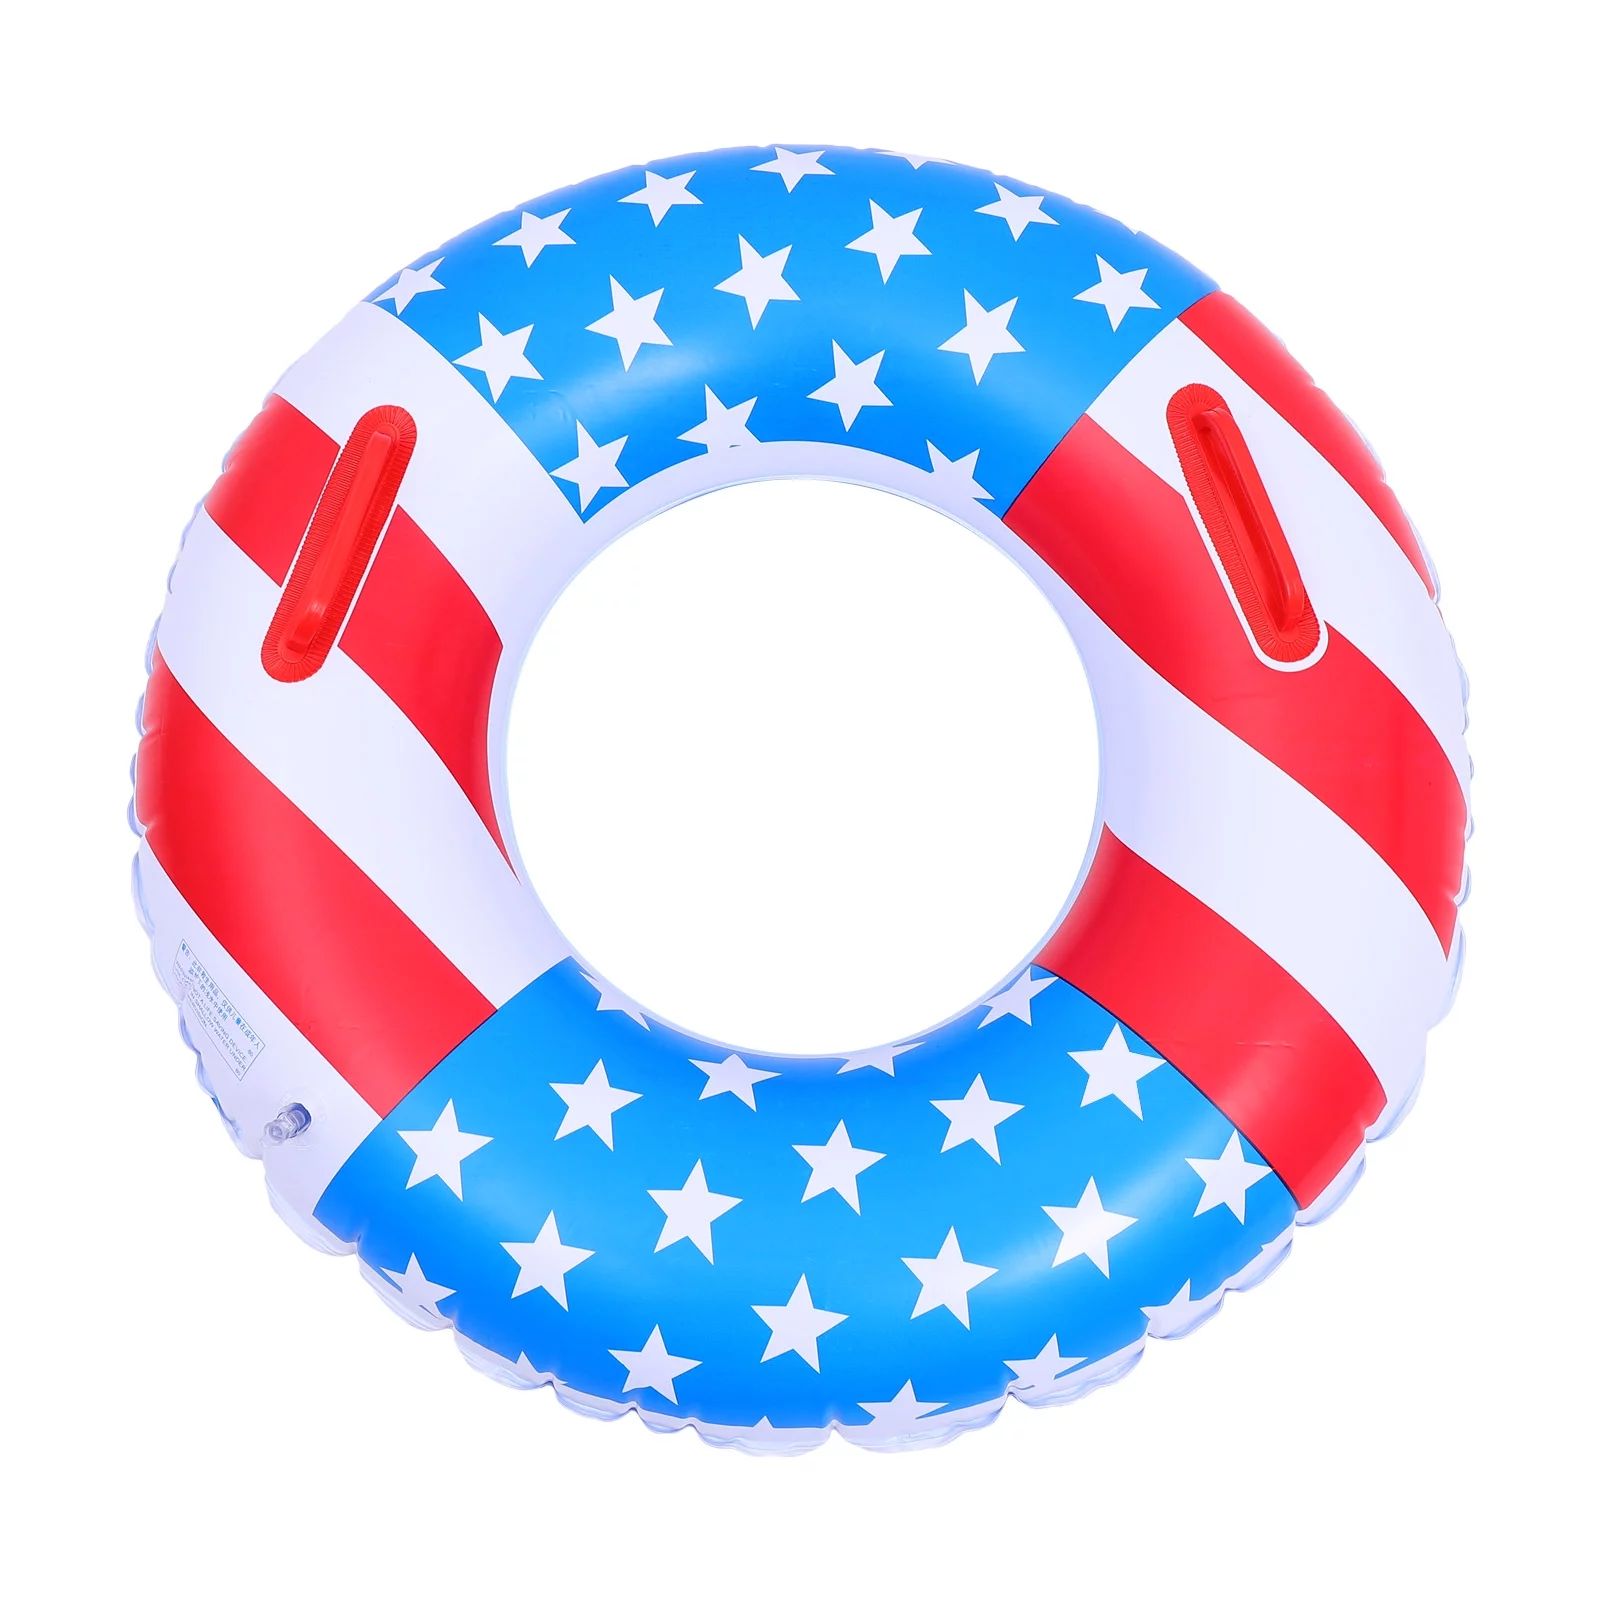 Eease Adult Patriotic American Flag Inflatable Pool Float for Beach, Lake, and Pool. | Walmart (US)